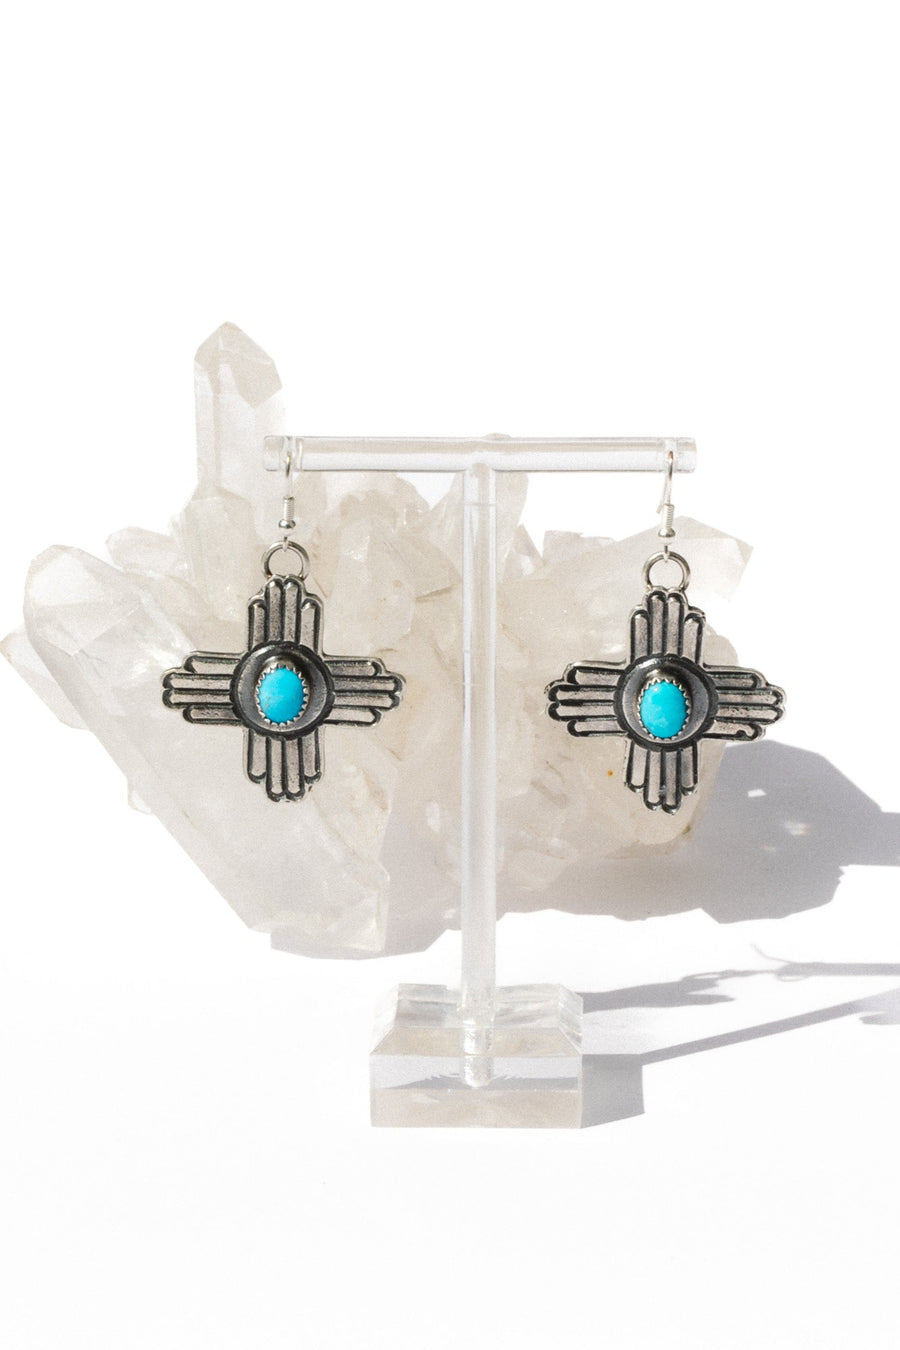 Sunwest Jewelry Silver Clear Sky Turquoise Earrings